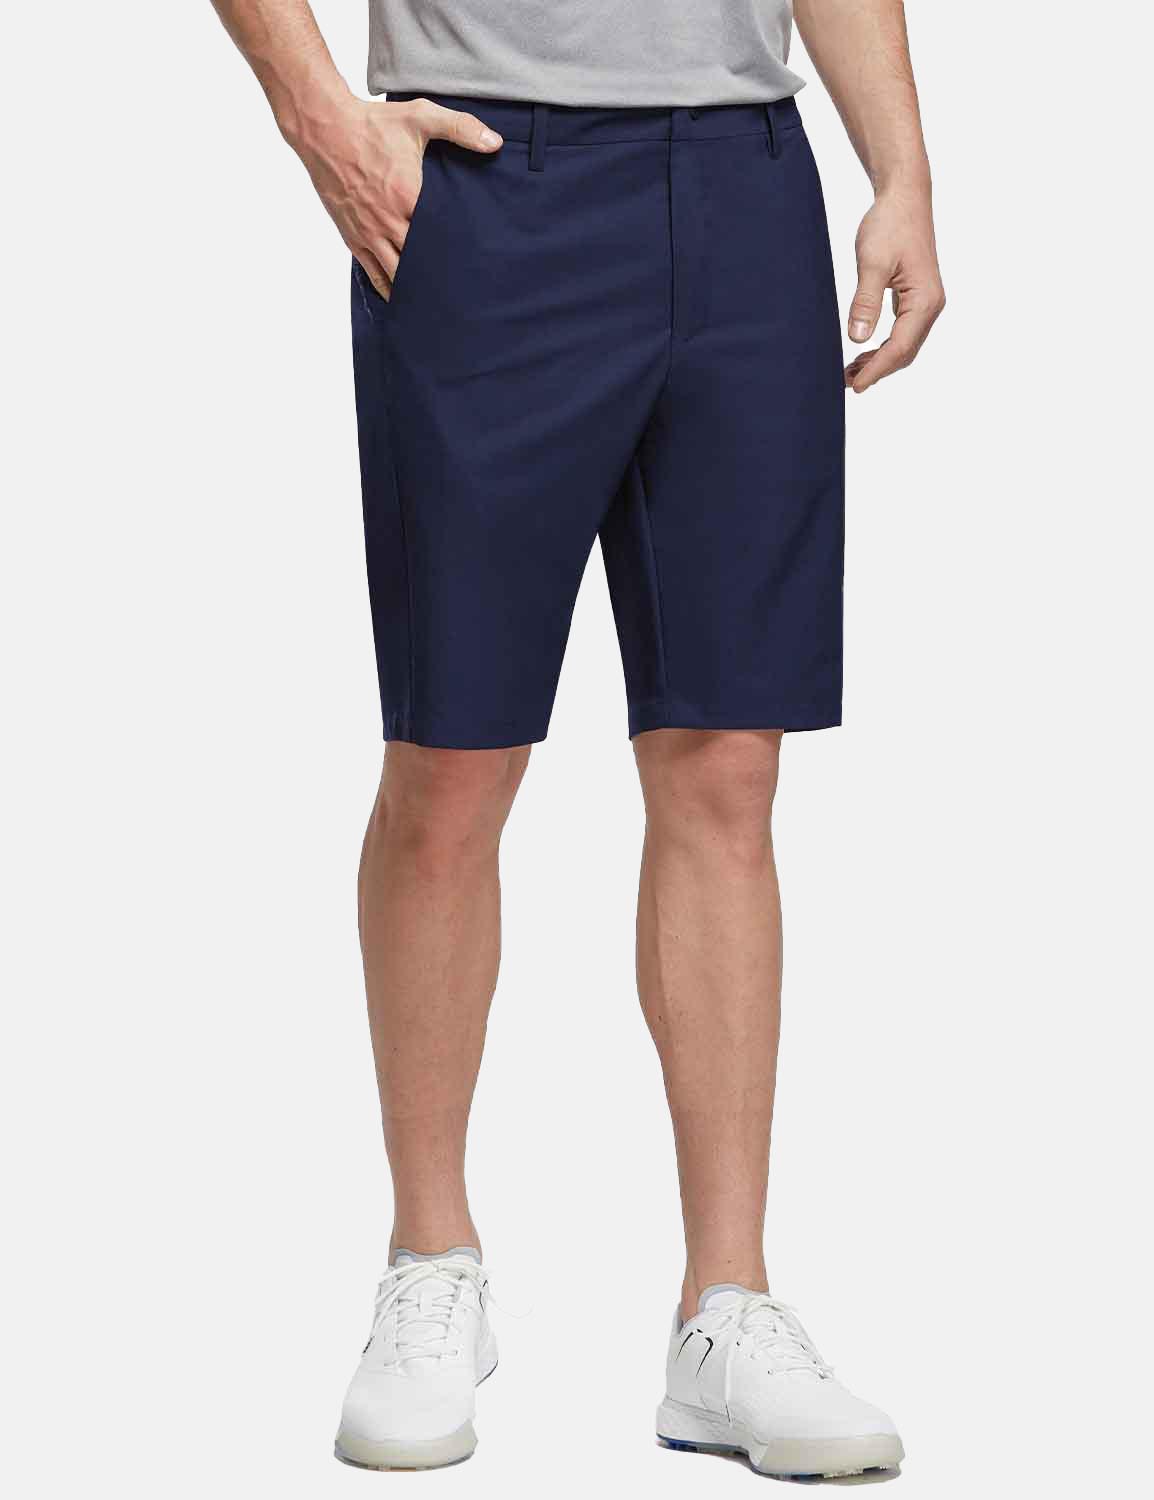 Baleaf Men's 10' UPF 50+ Lightweight Golf Shorts w Zipper Pockets cga005 Medieval Blue Side